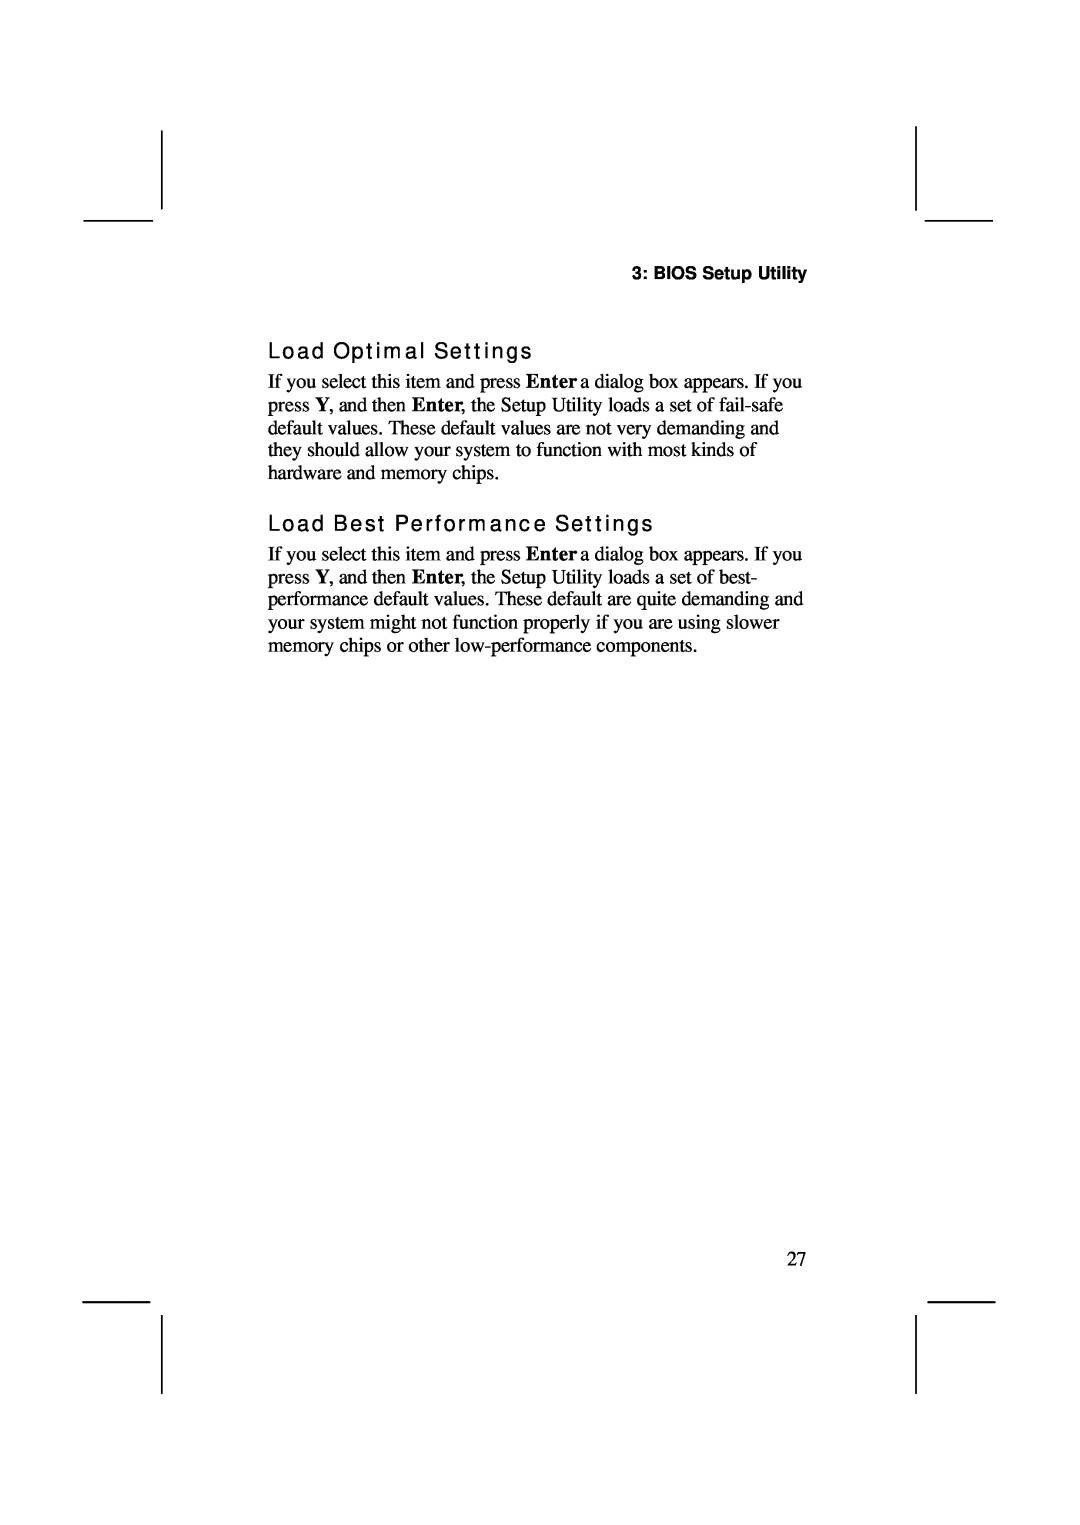 IBM MS7308D/E, V1.6 S63X/JUNE 2000 user manual Load Optimal Settings, Load Best Performance Settings 